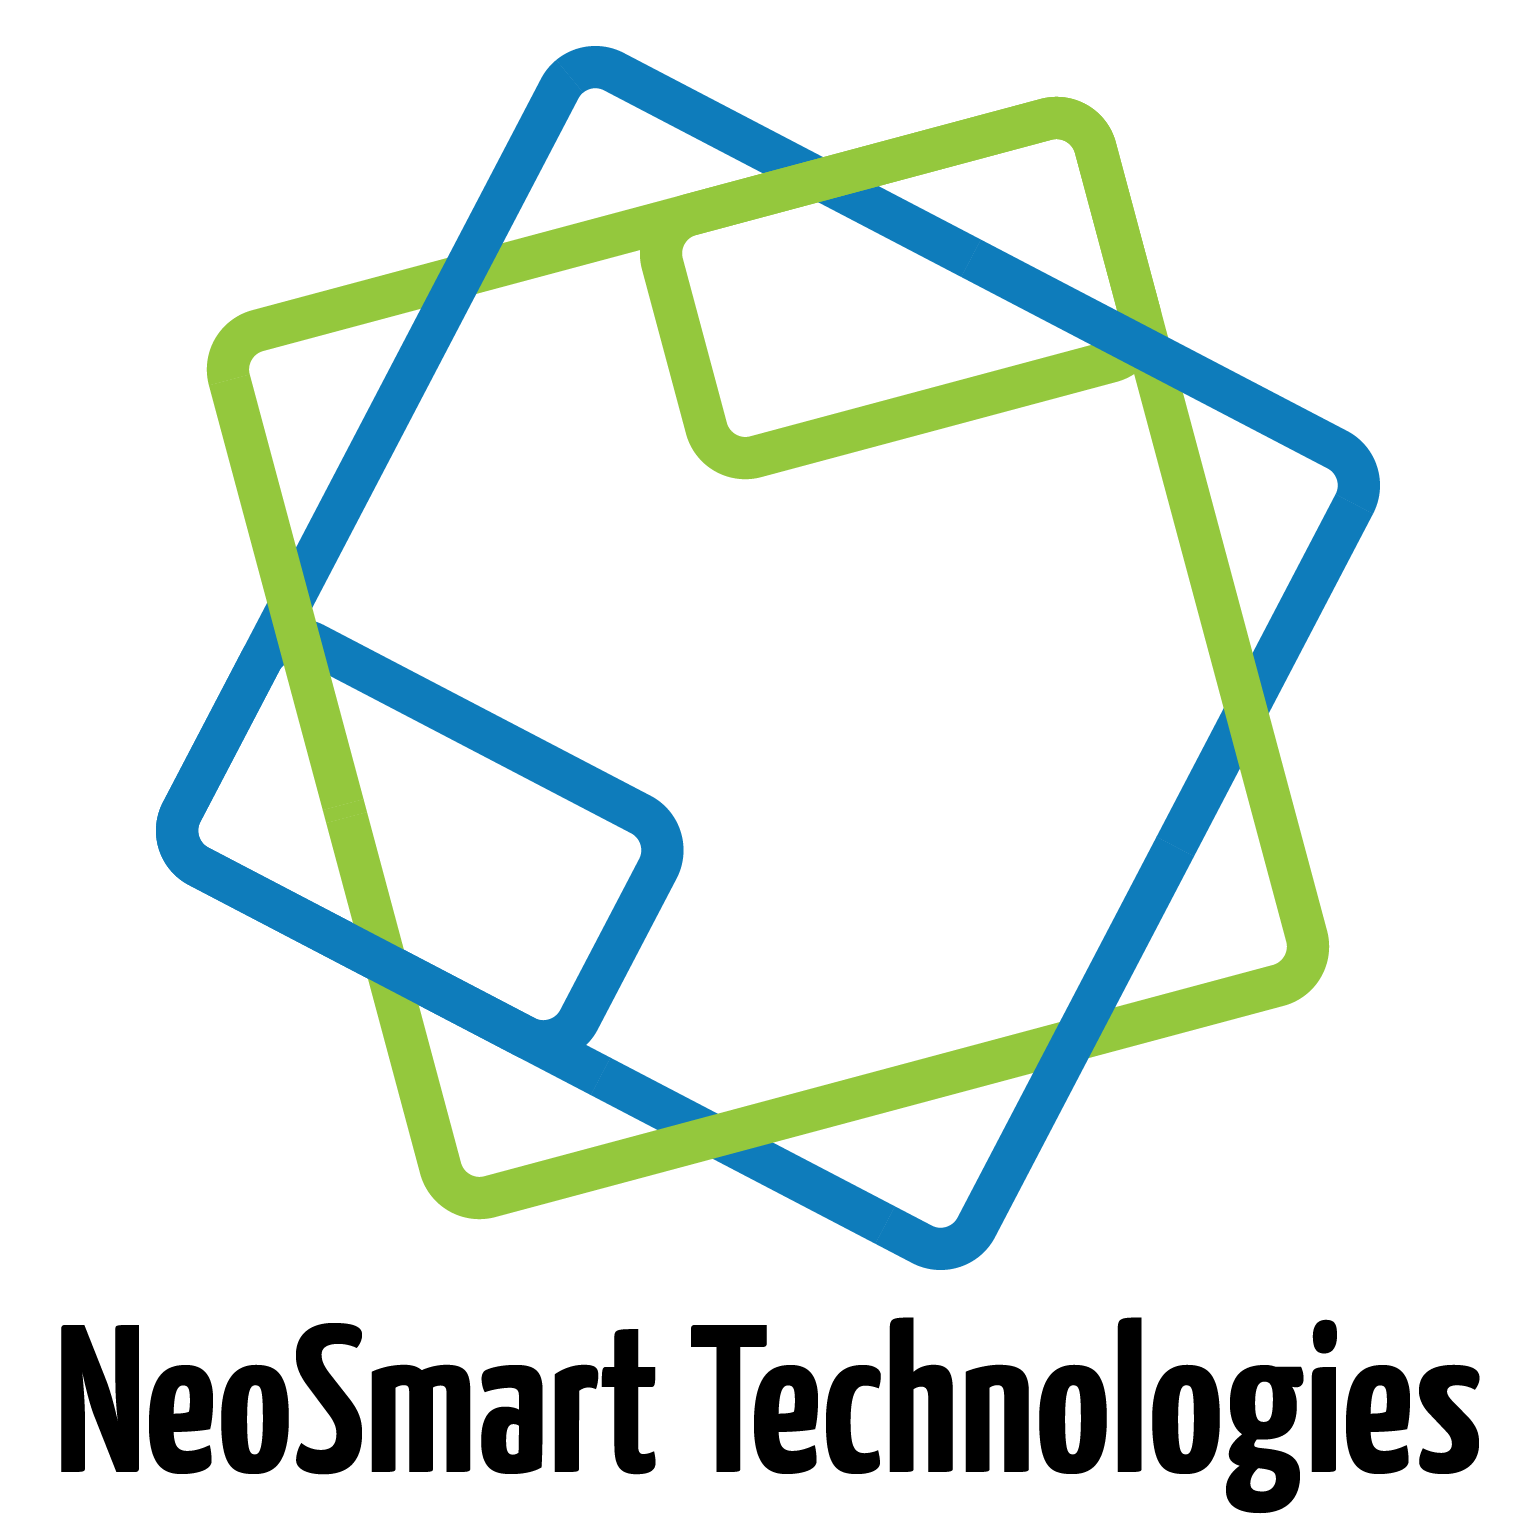 NeoSmart Technologies